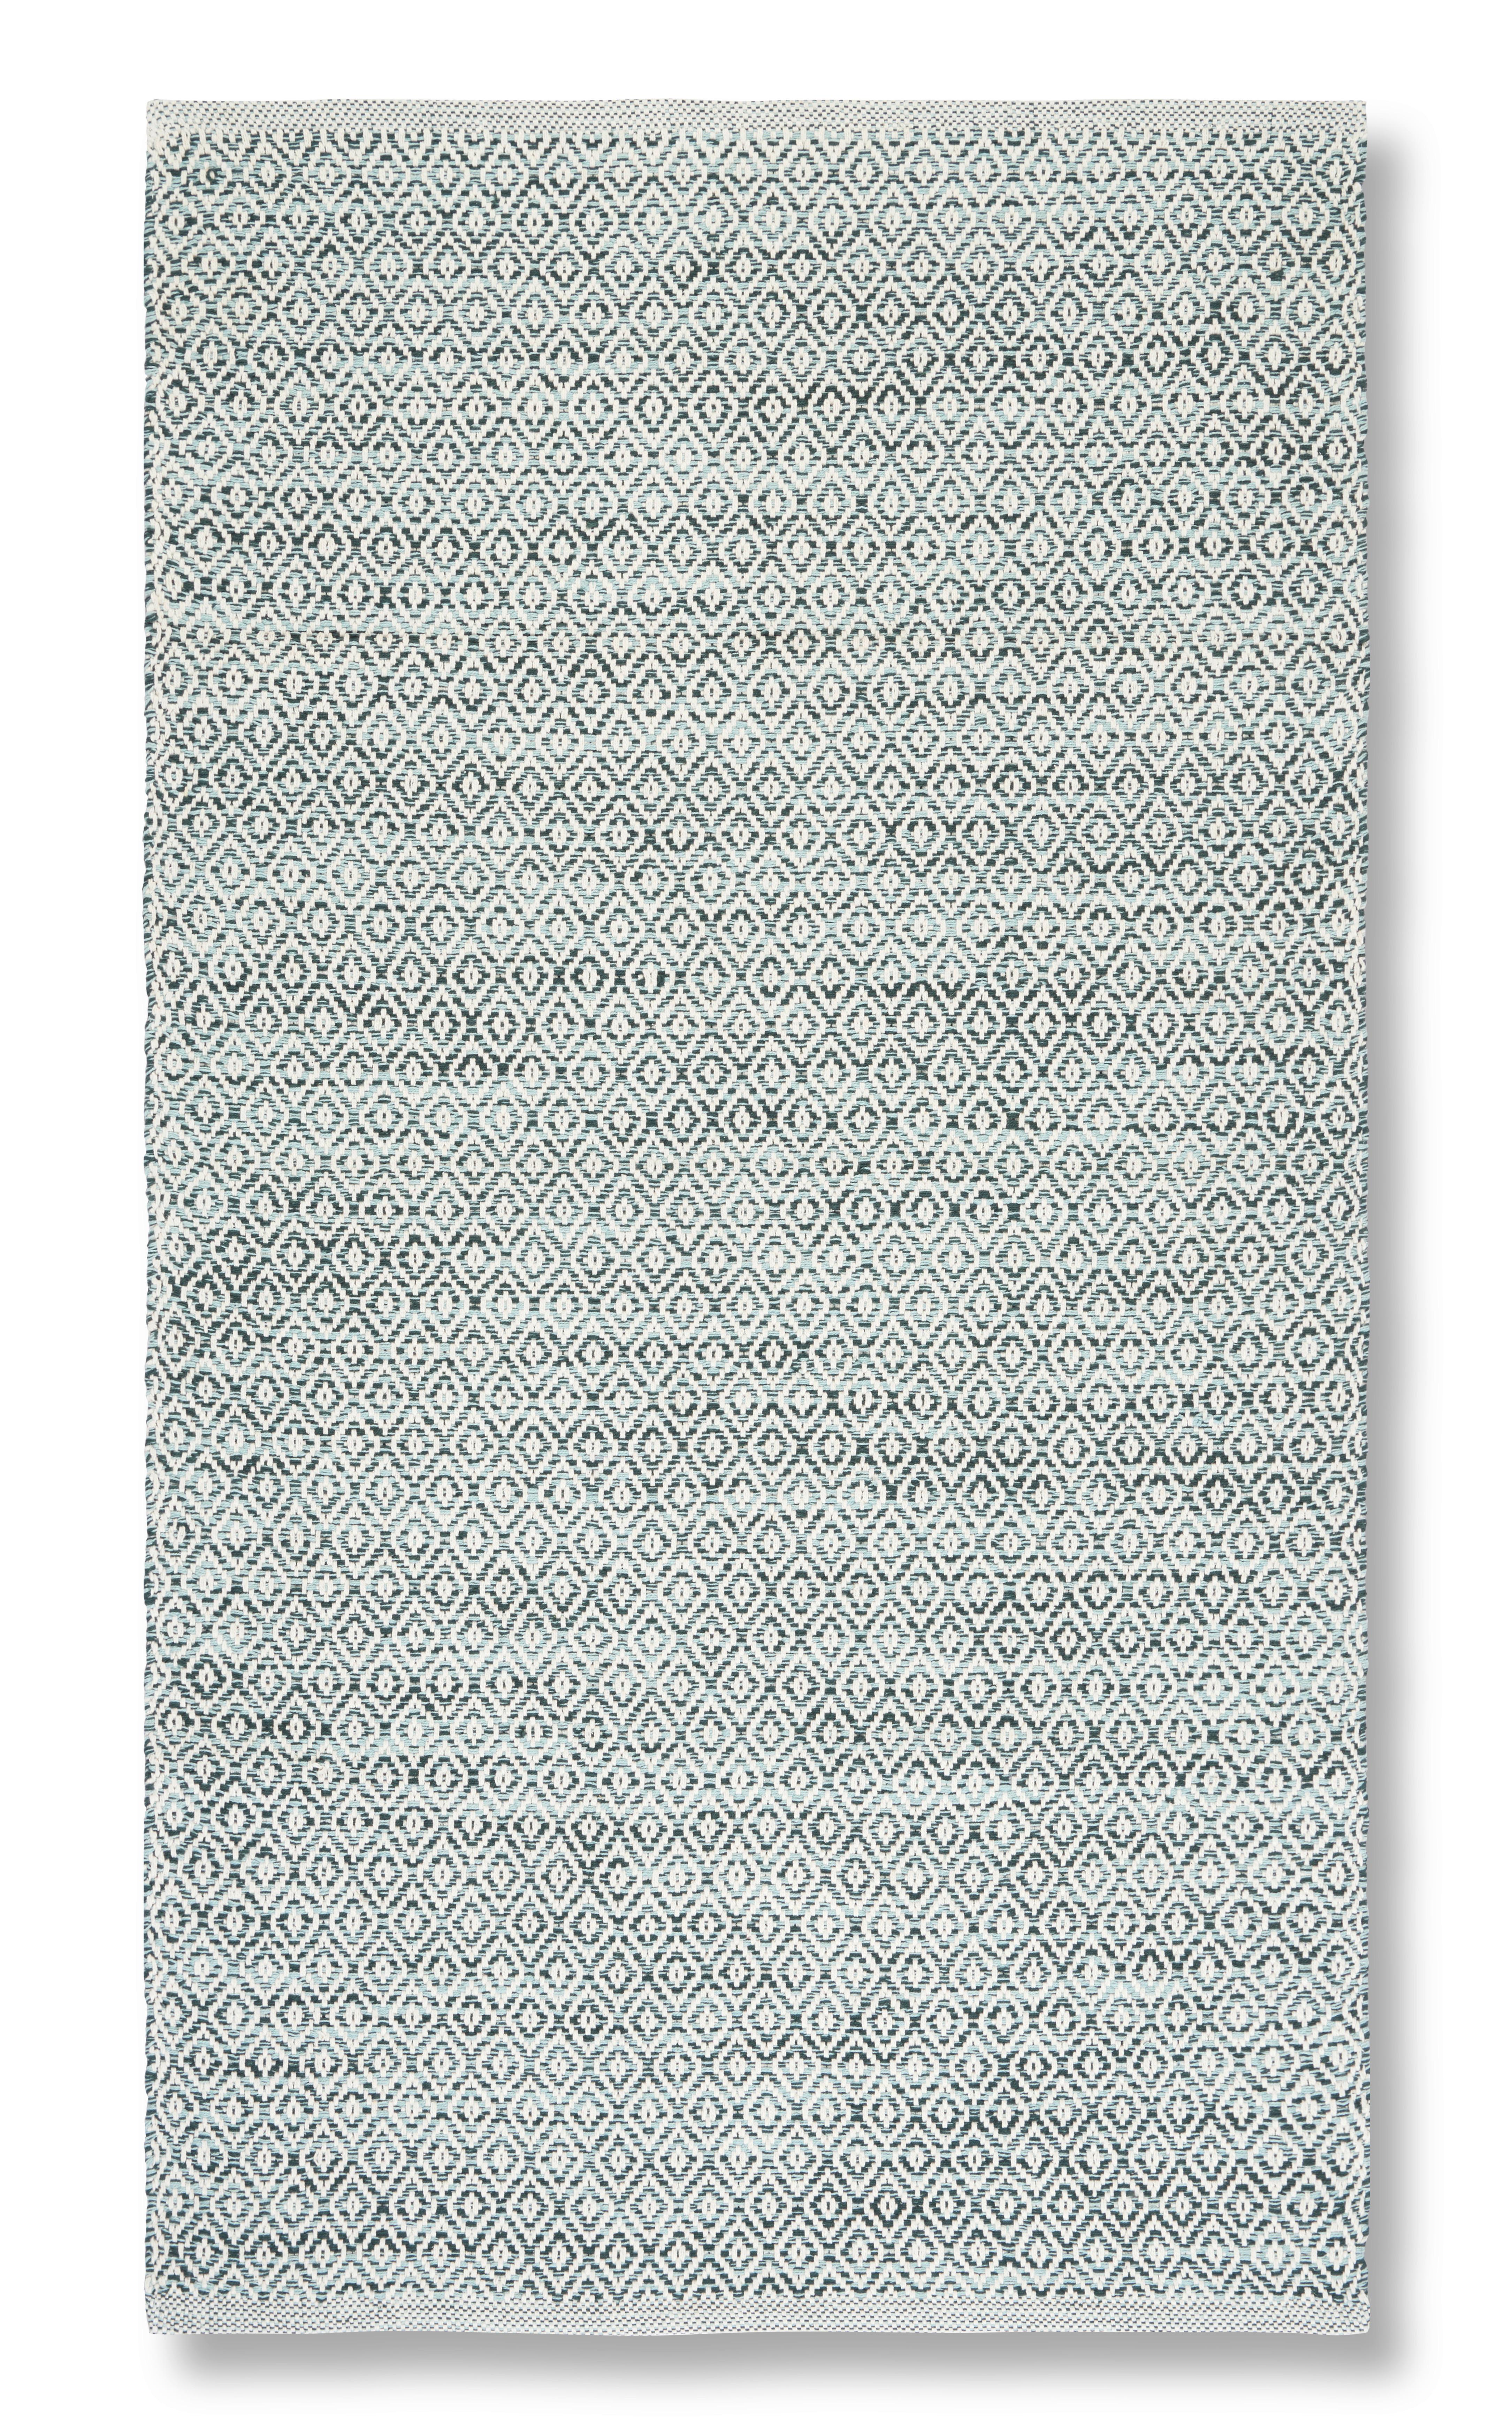 Covor țesut de mână CAROLA 1 - verde, Basics, textil (60/120cm) - Modern Living